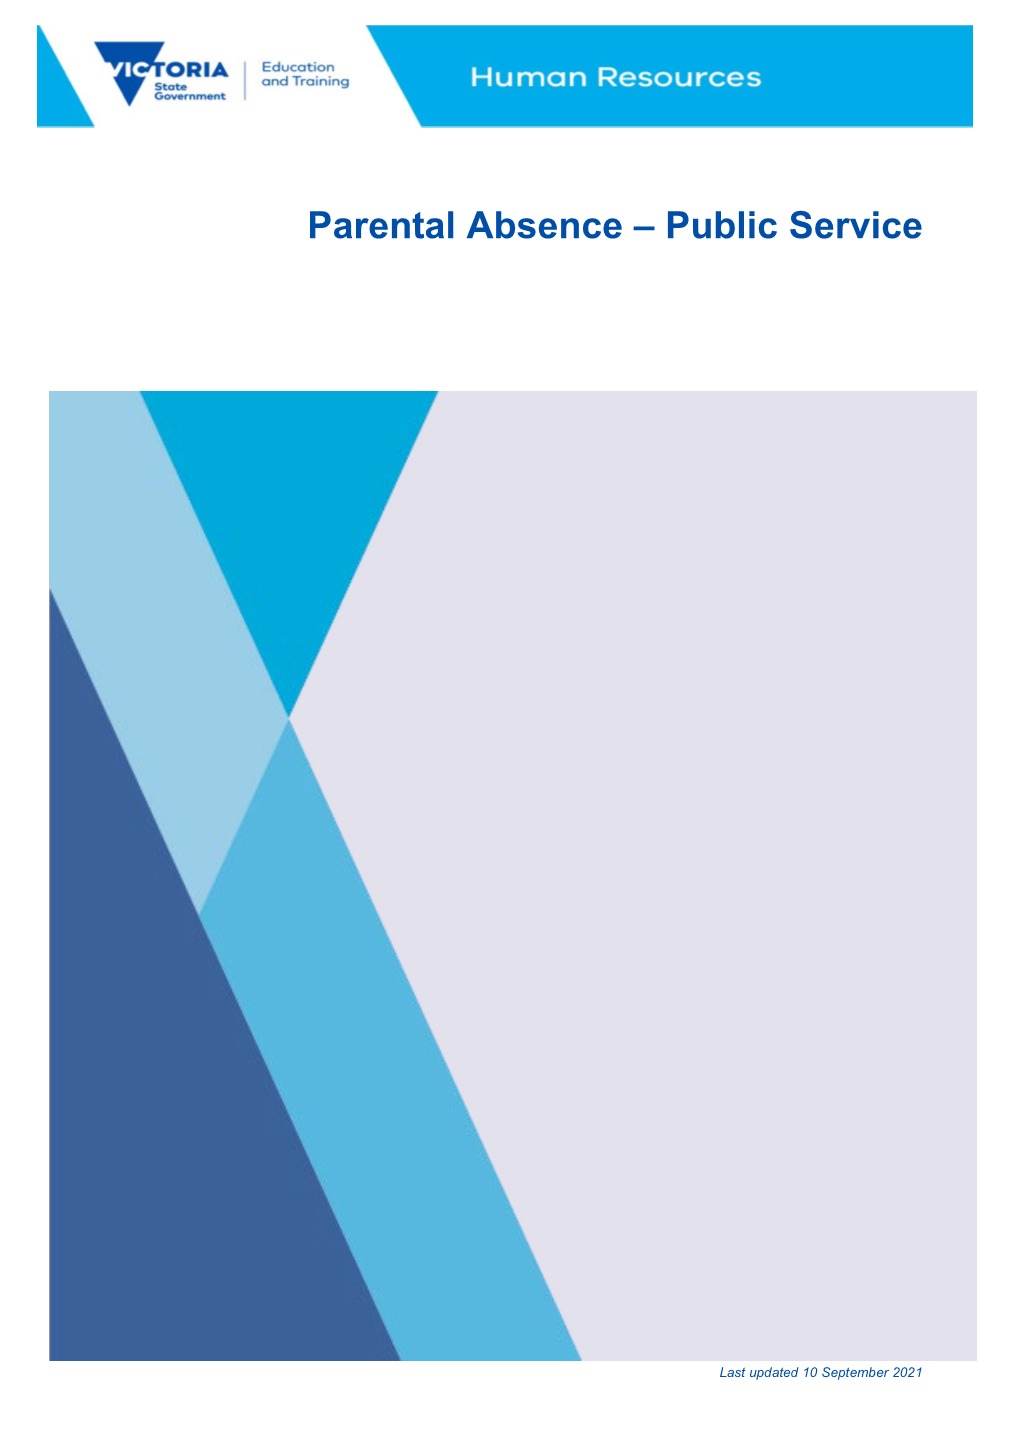 Parental Leave Policy Guide Public Service